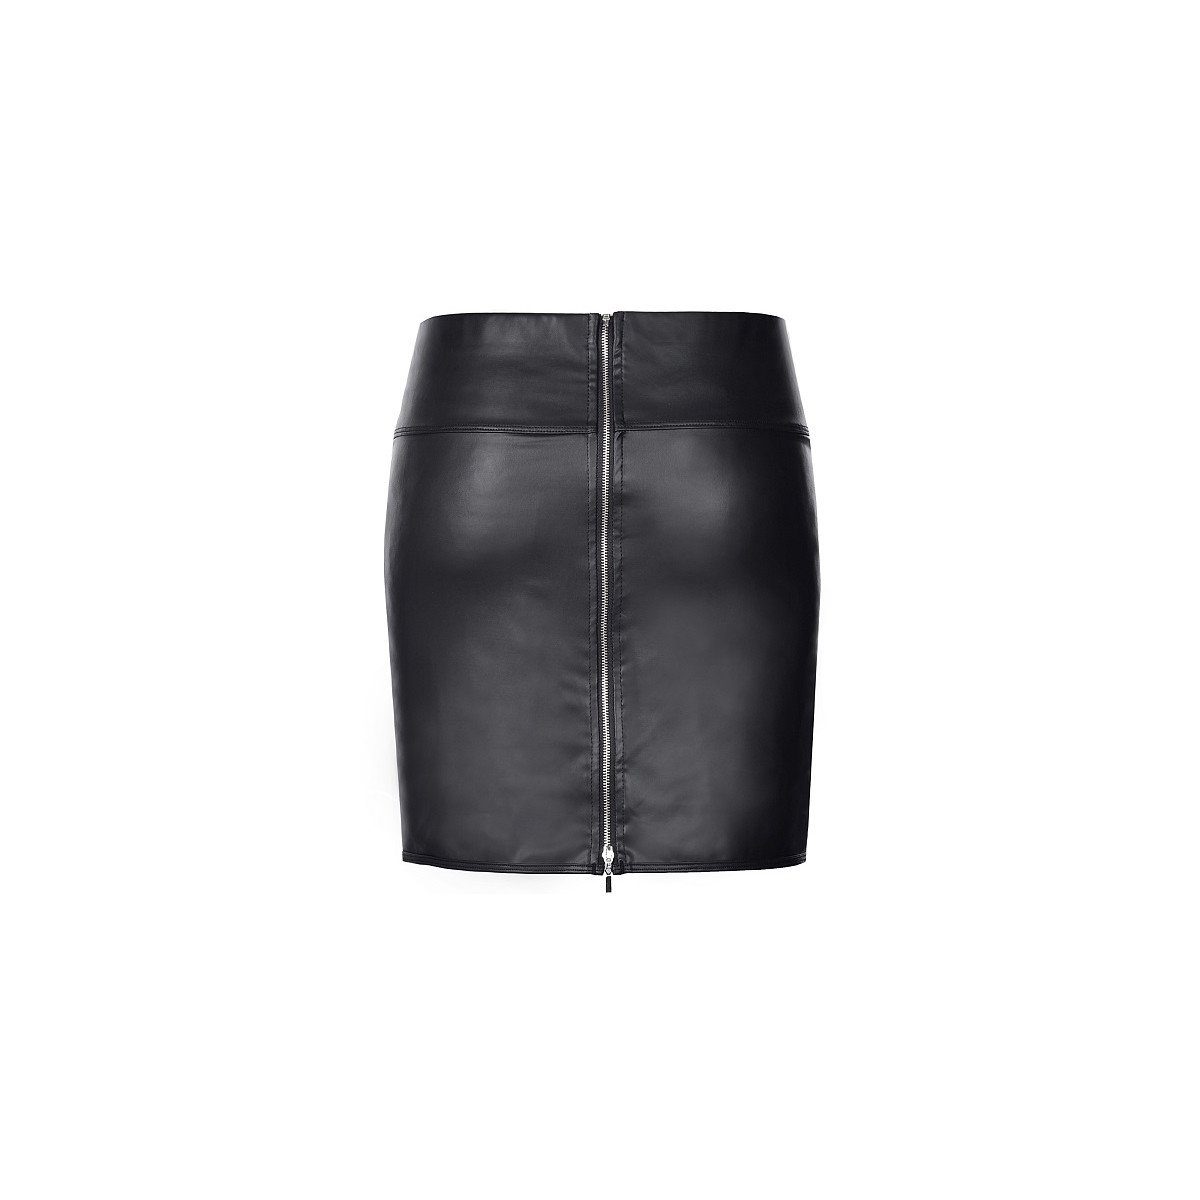 Axami (L,M,S,XL) Midirock V-9179 black - skirt